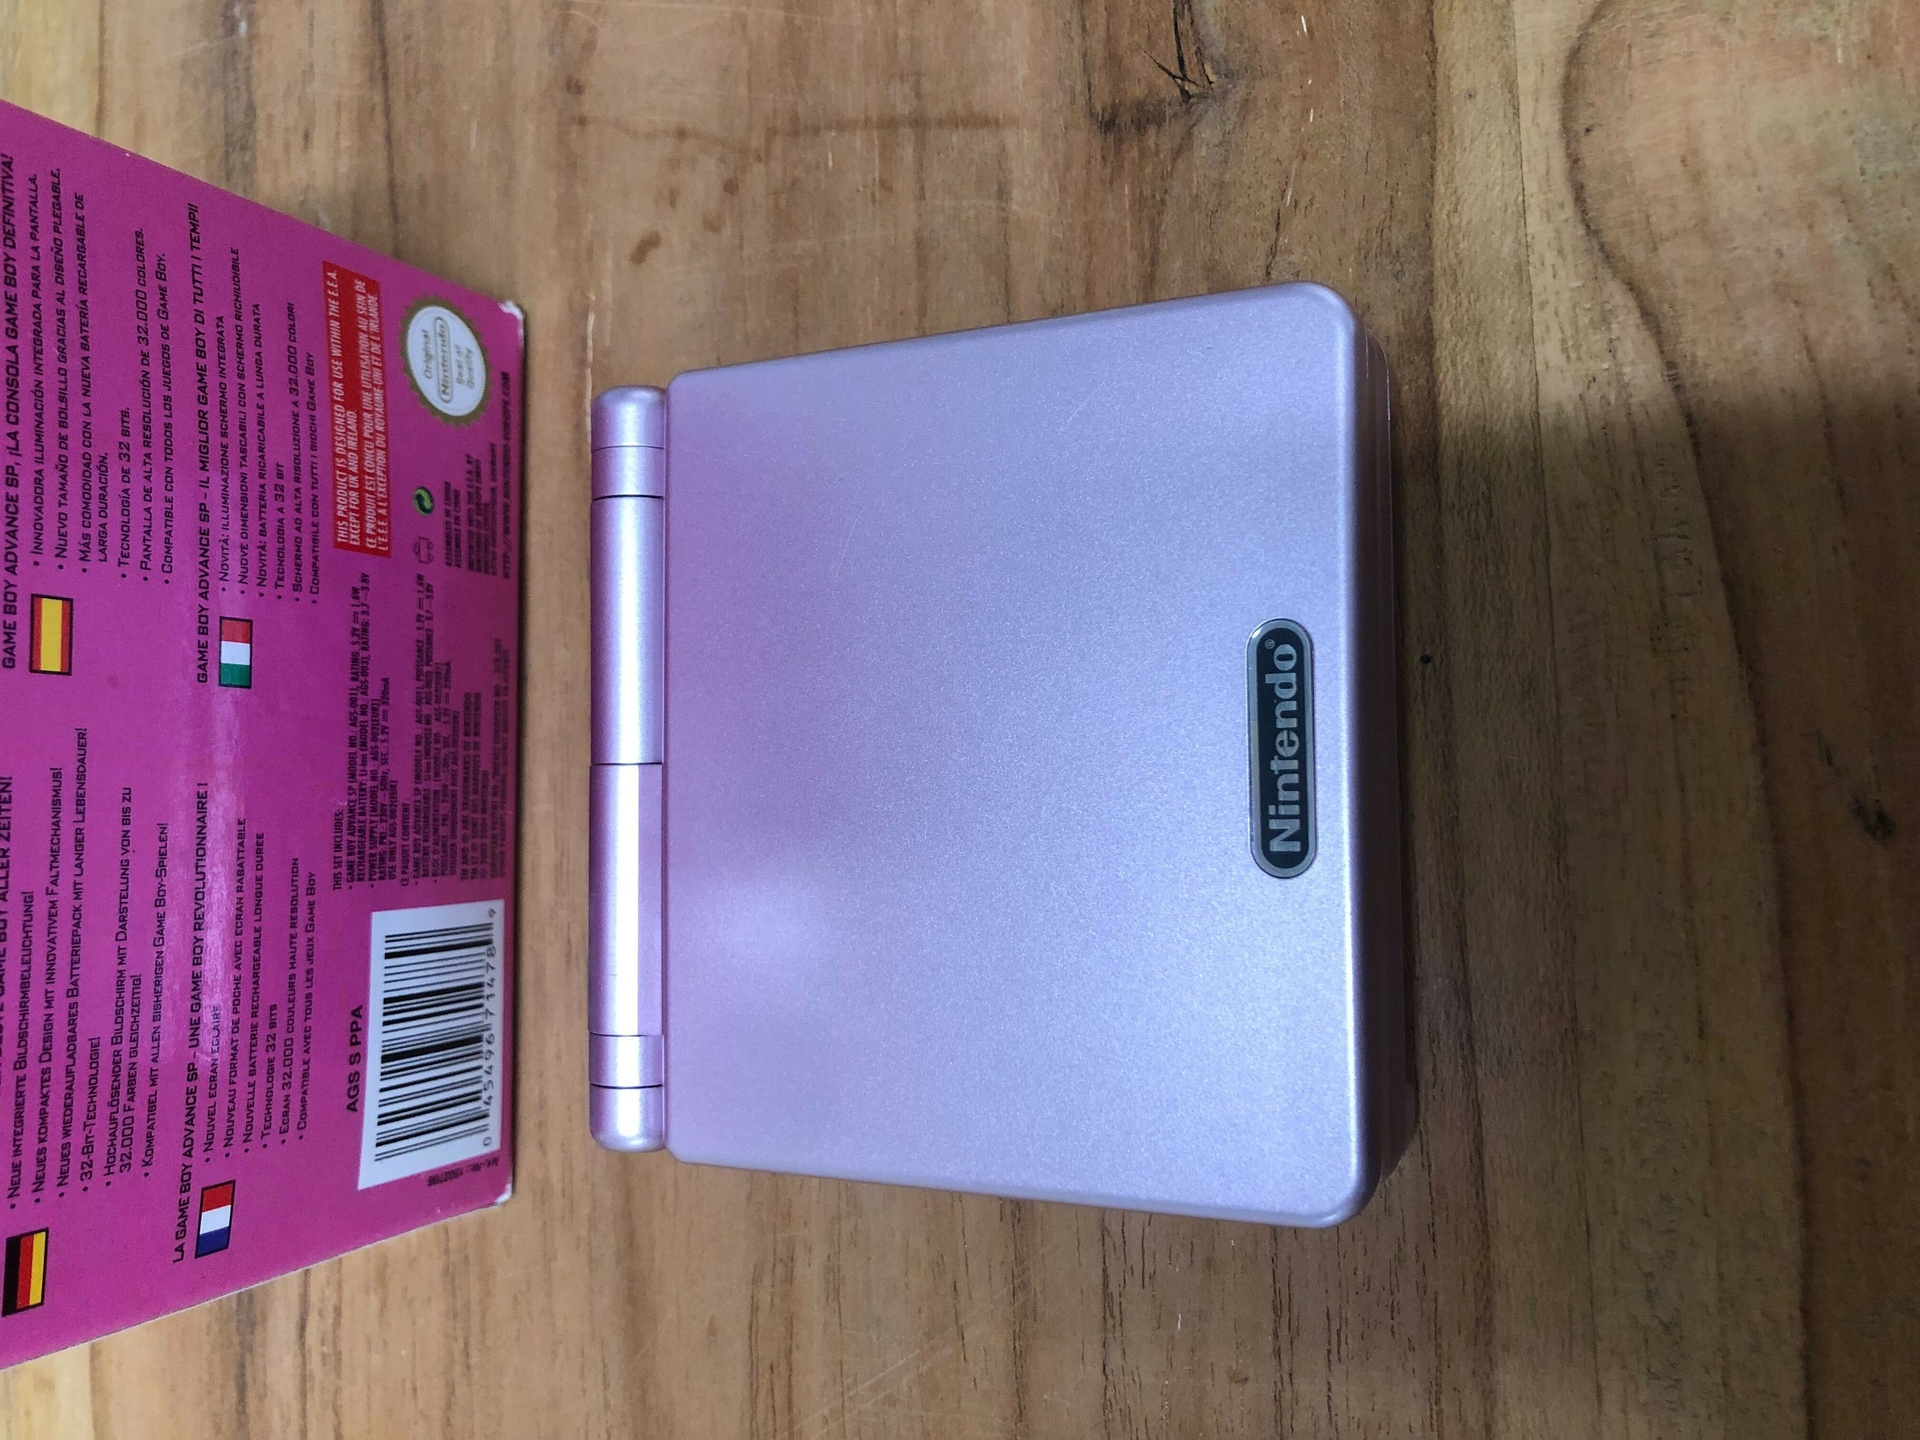 Gameboy Advance SP Pink [Complete] - Gameboy Advance Hardware - 3